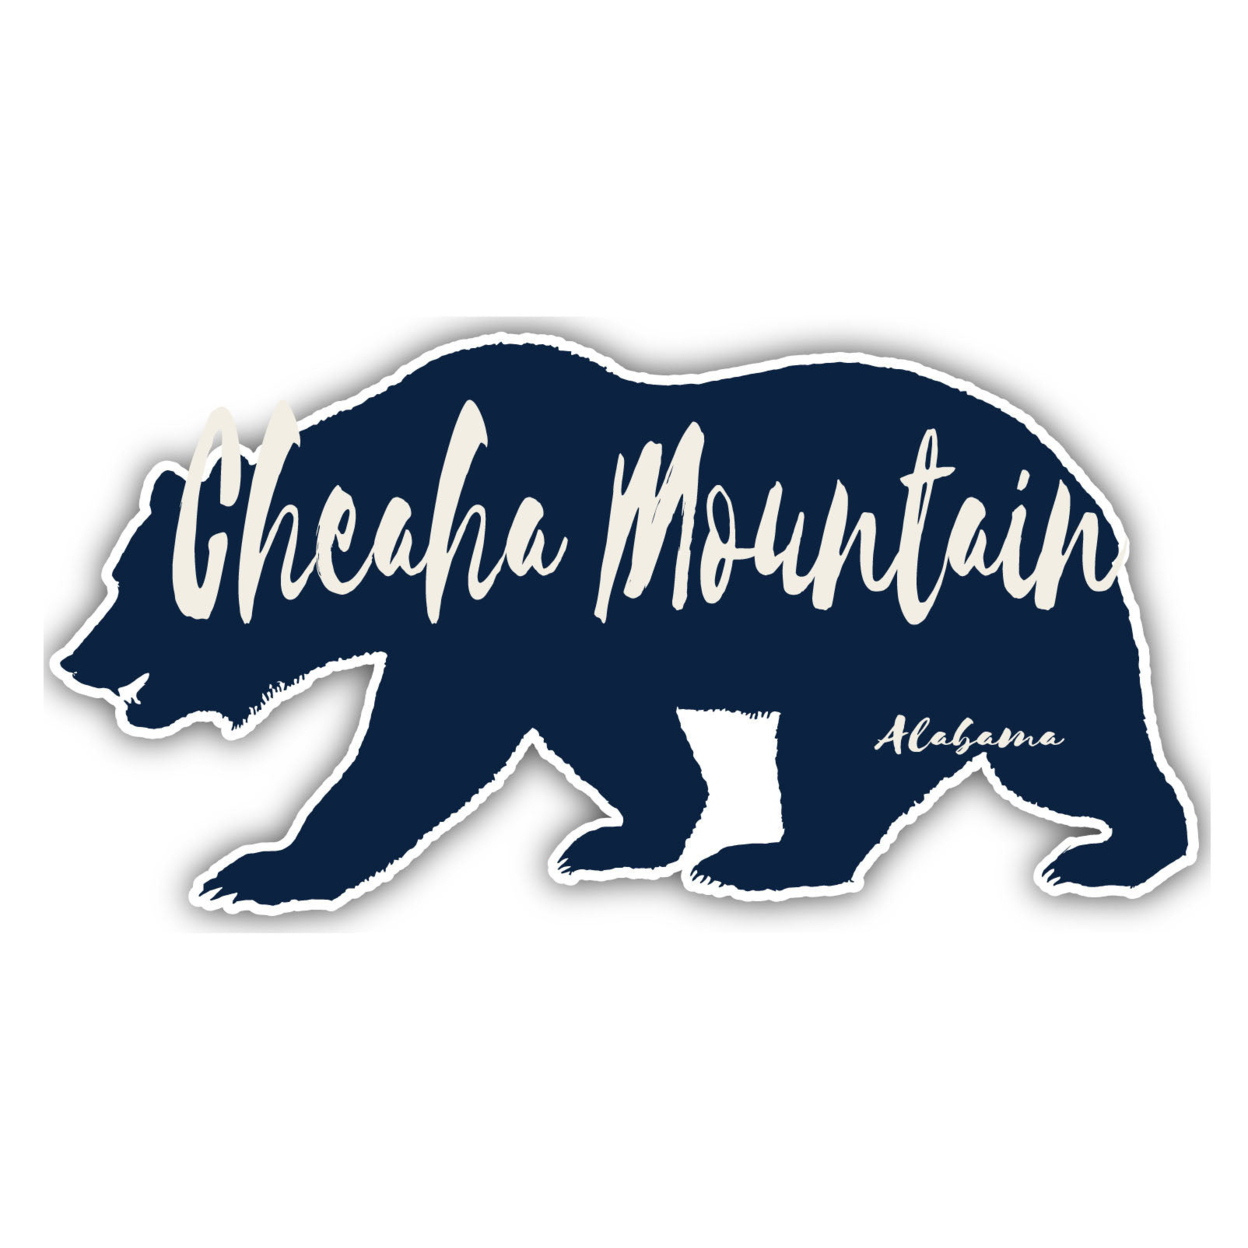 Cheaha Mountain Alabama Souvenir Decorative Stickers (Choose Theme And Size) - Single Unit, 10-Inch, Tent